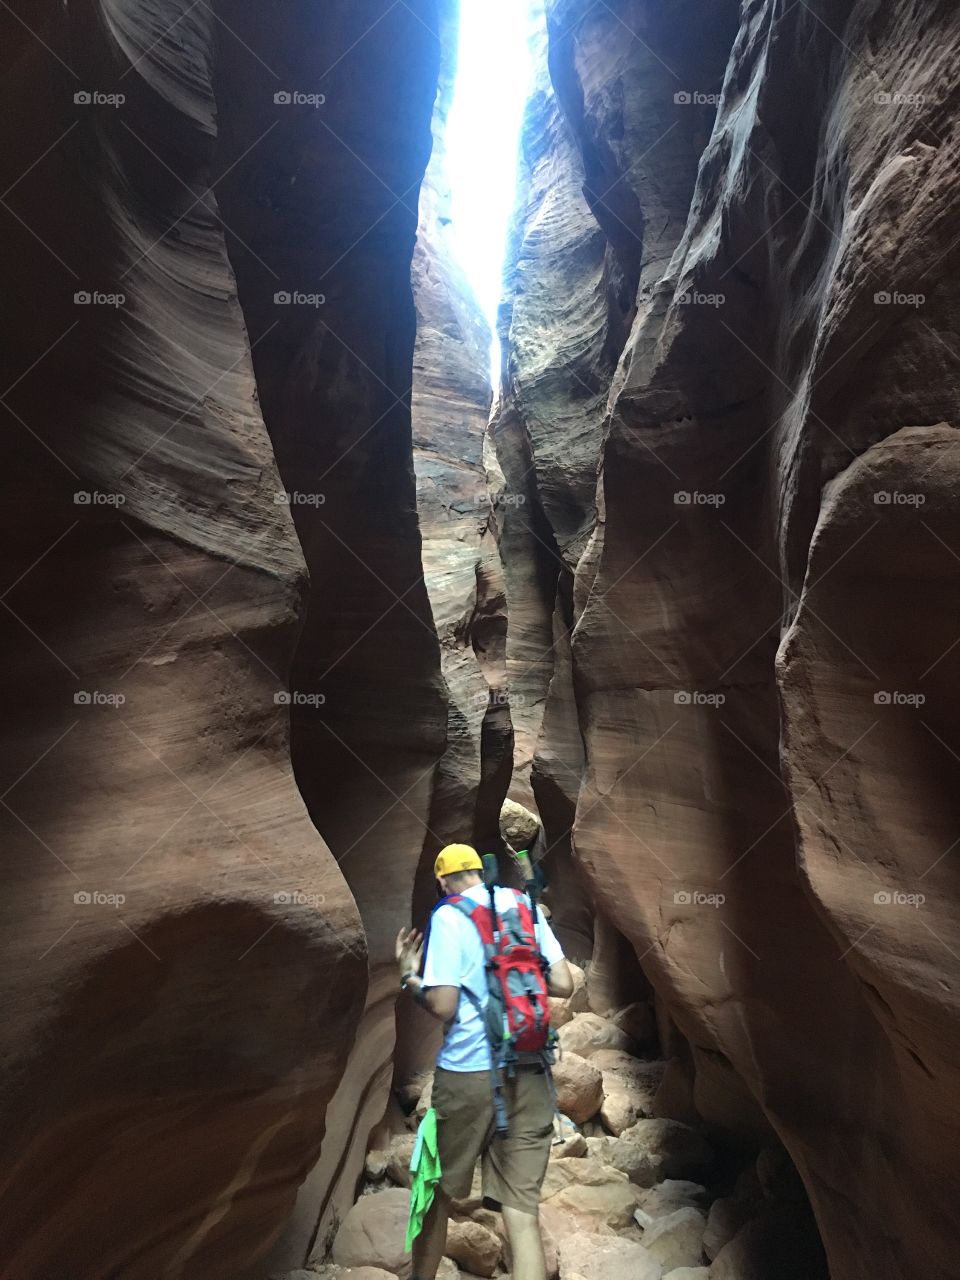 Love hiking slot canyons